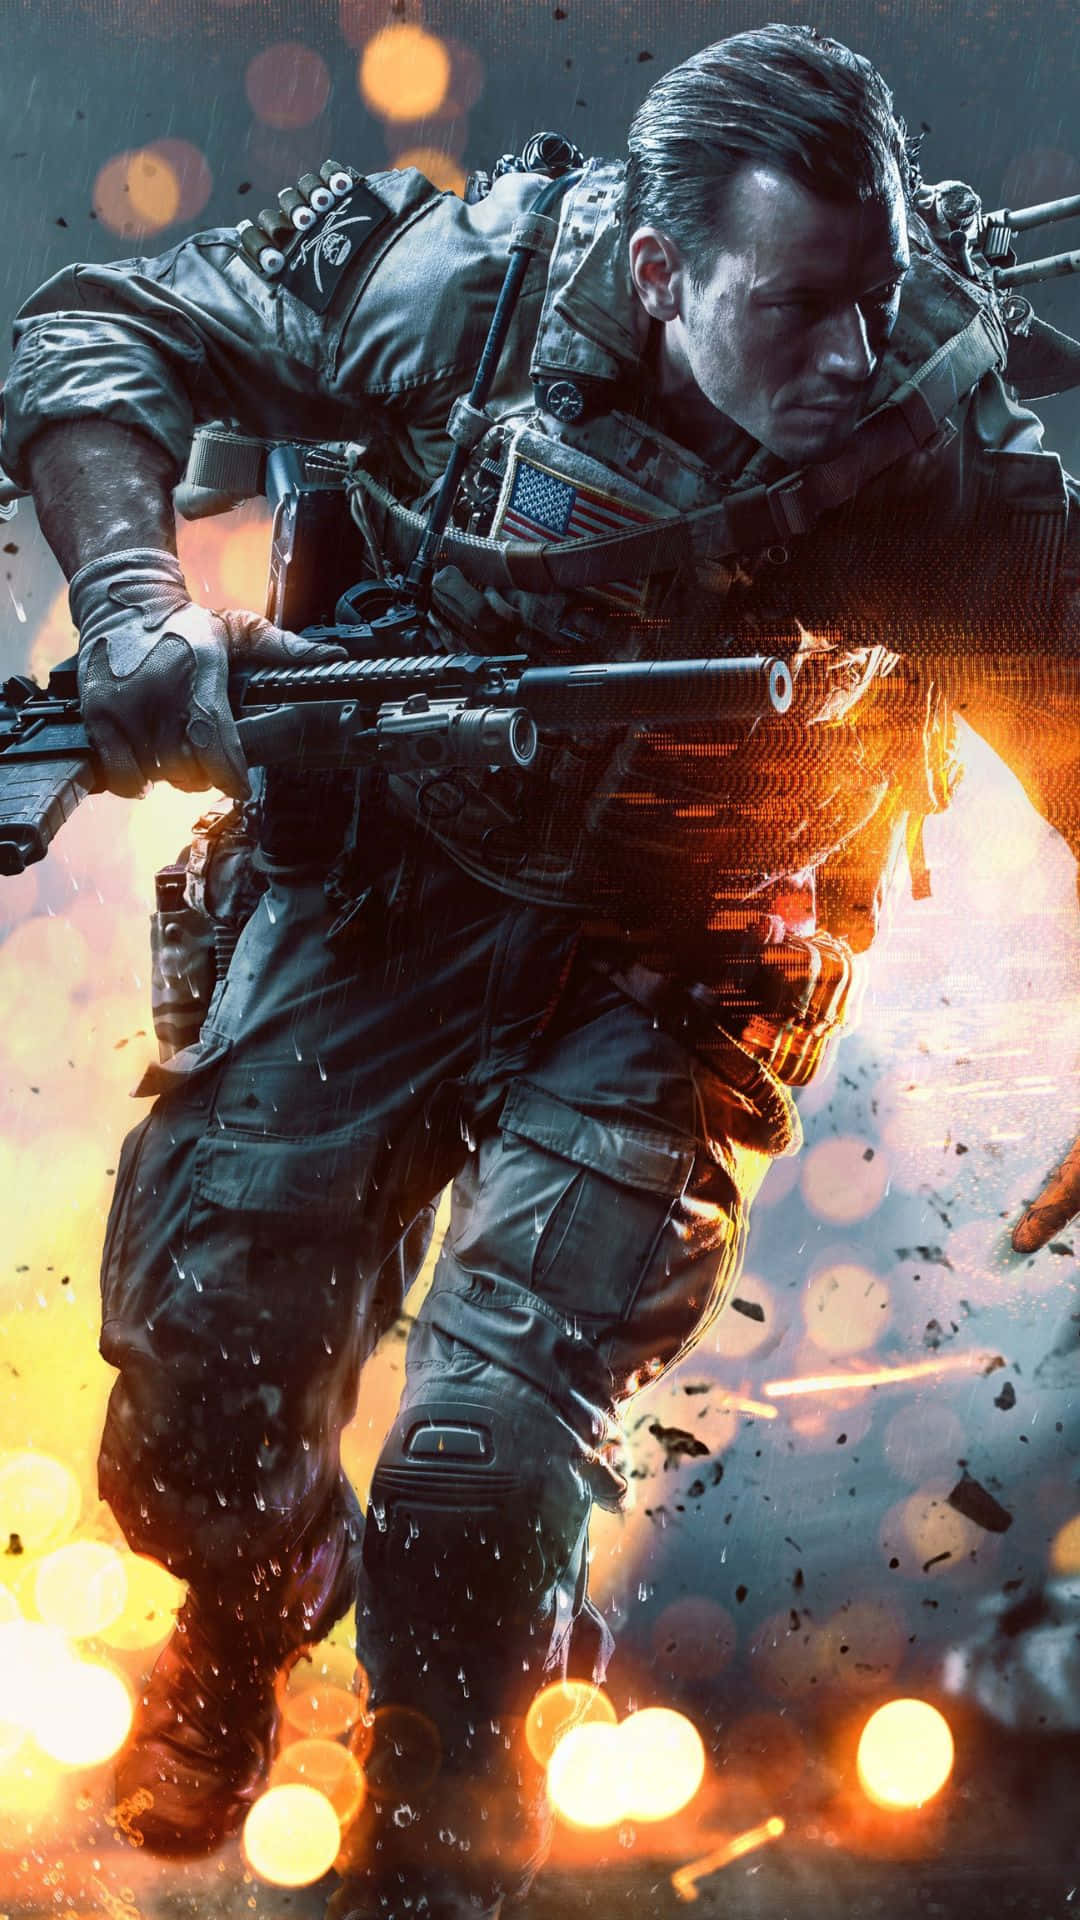 Fondode Pantalla De Battlefield 1 En Android - Sargento Huyendo